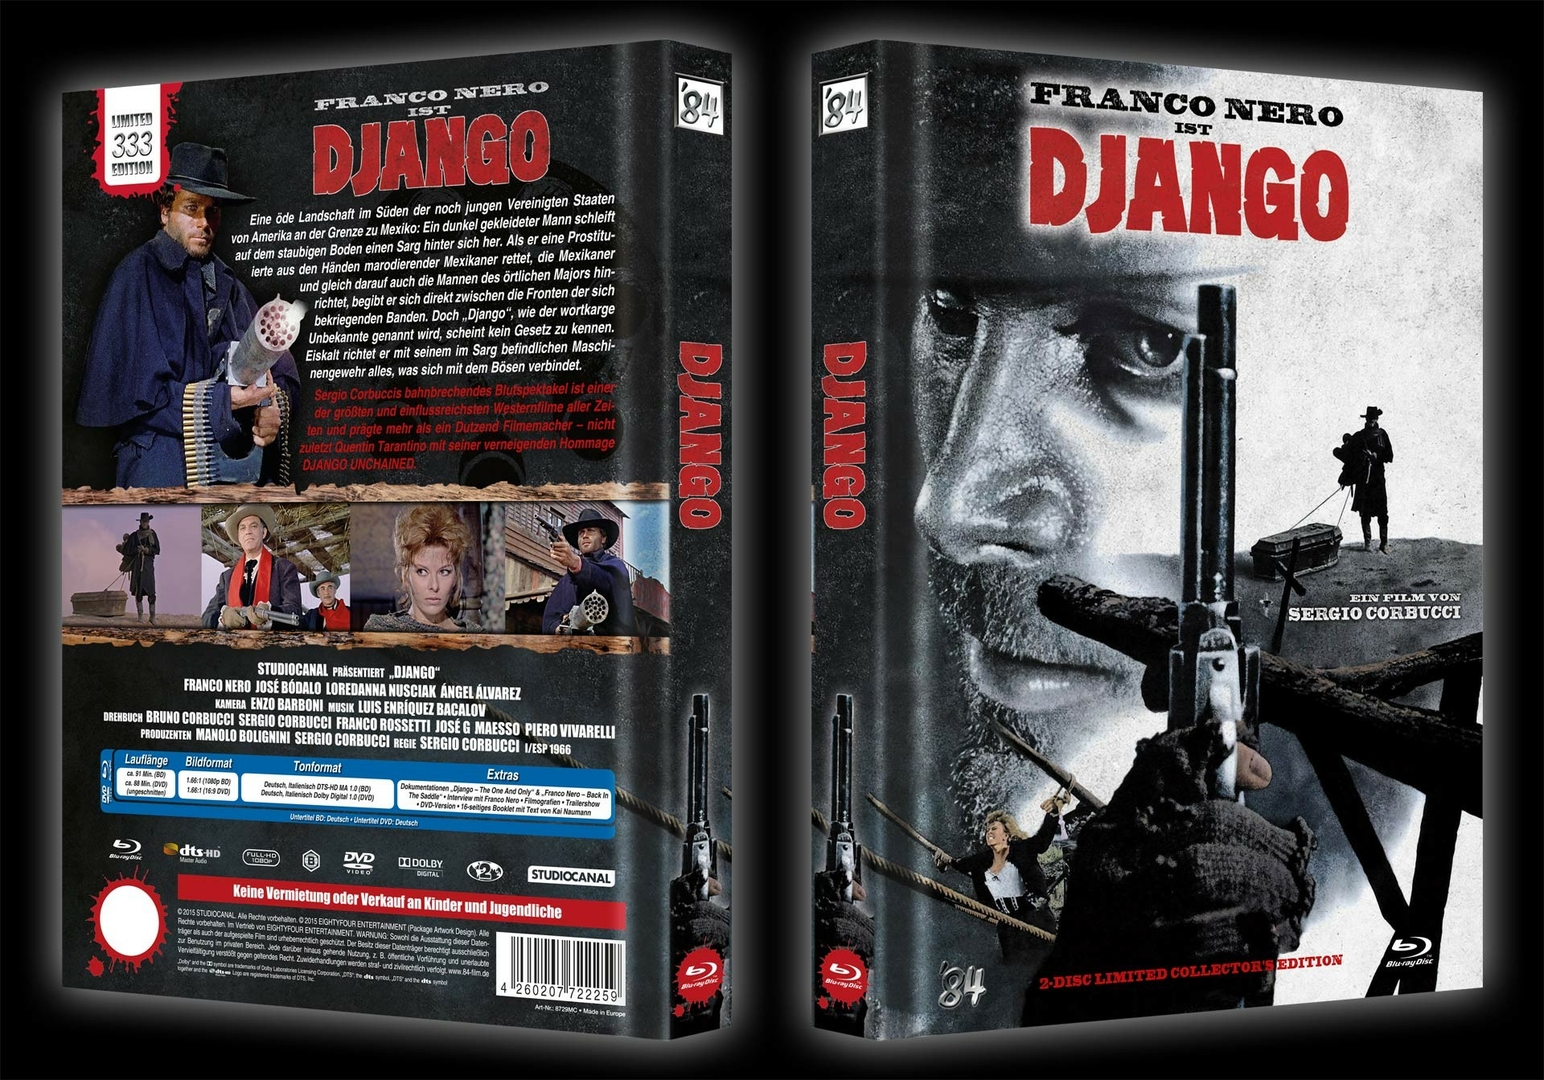 django-mediabook-cover-c-komplett.jpg